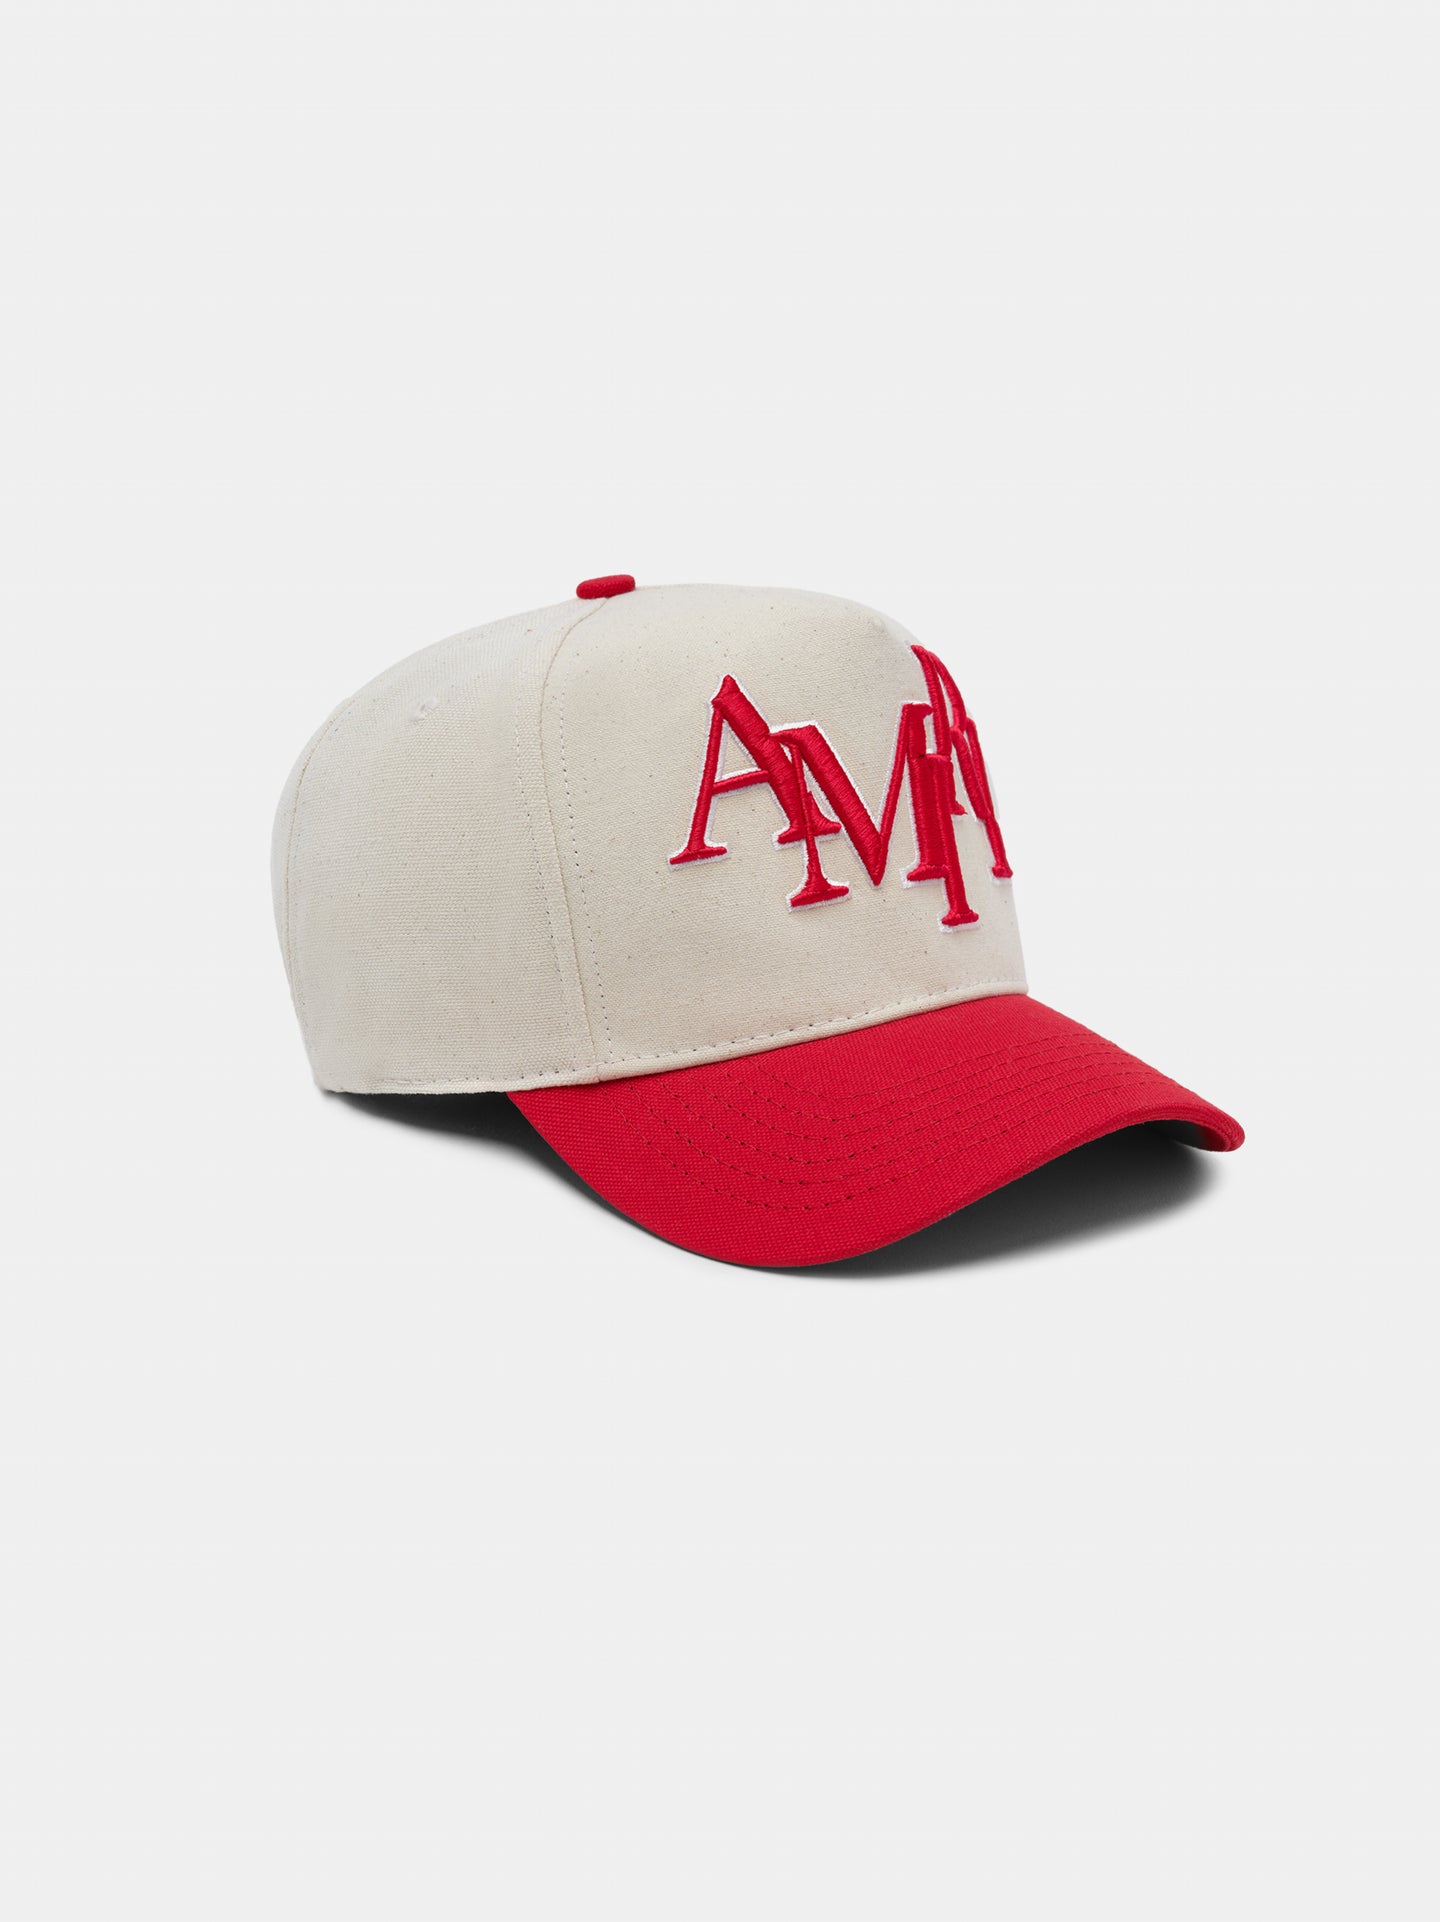 STAGGERED AMIRI CANVAS HAT - Alabaster Red